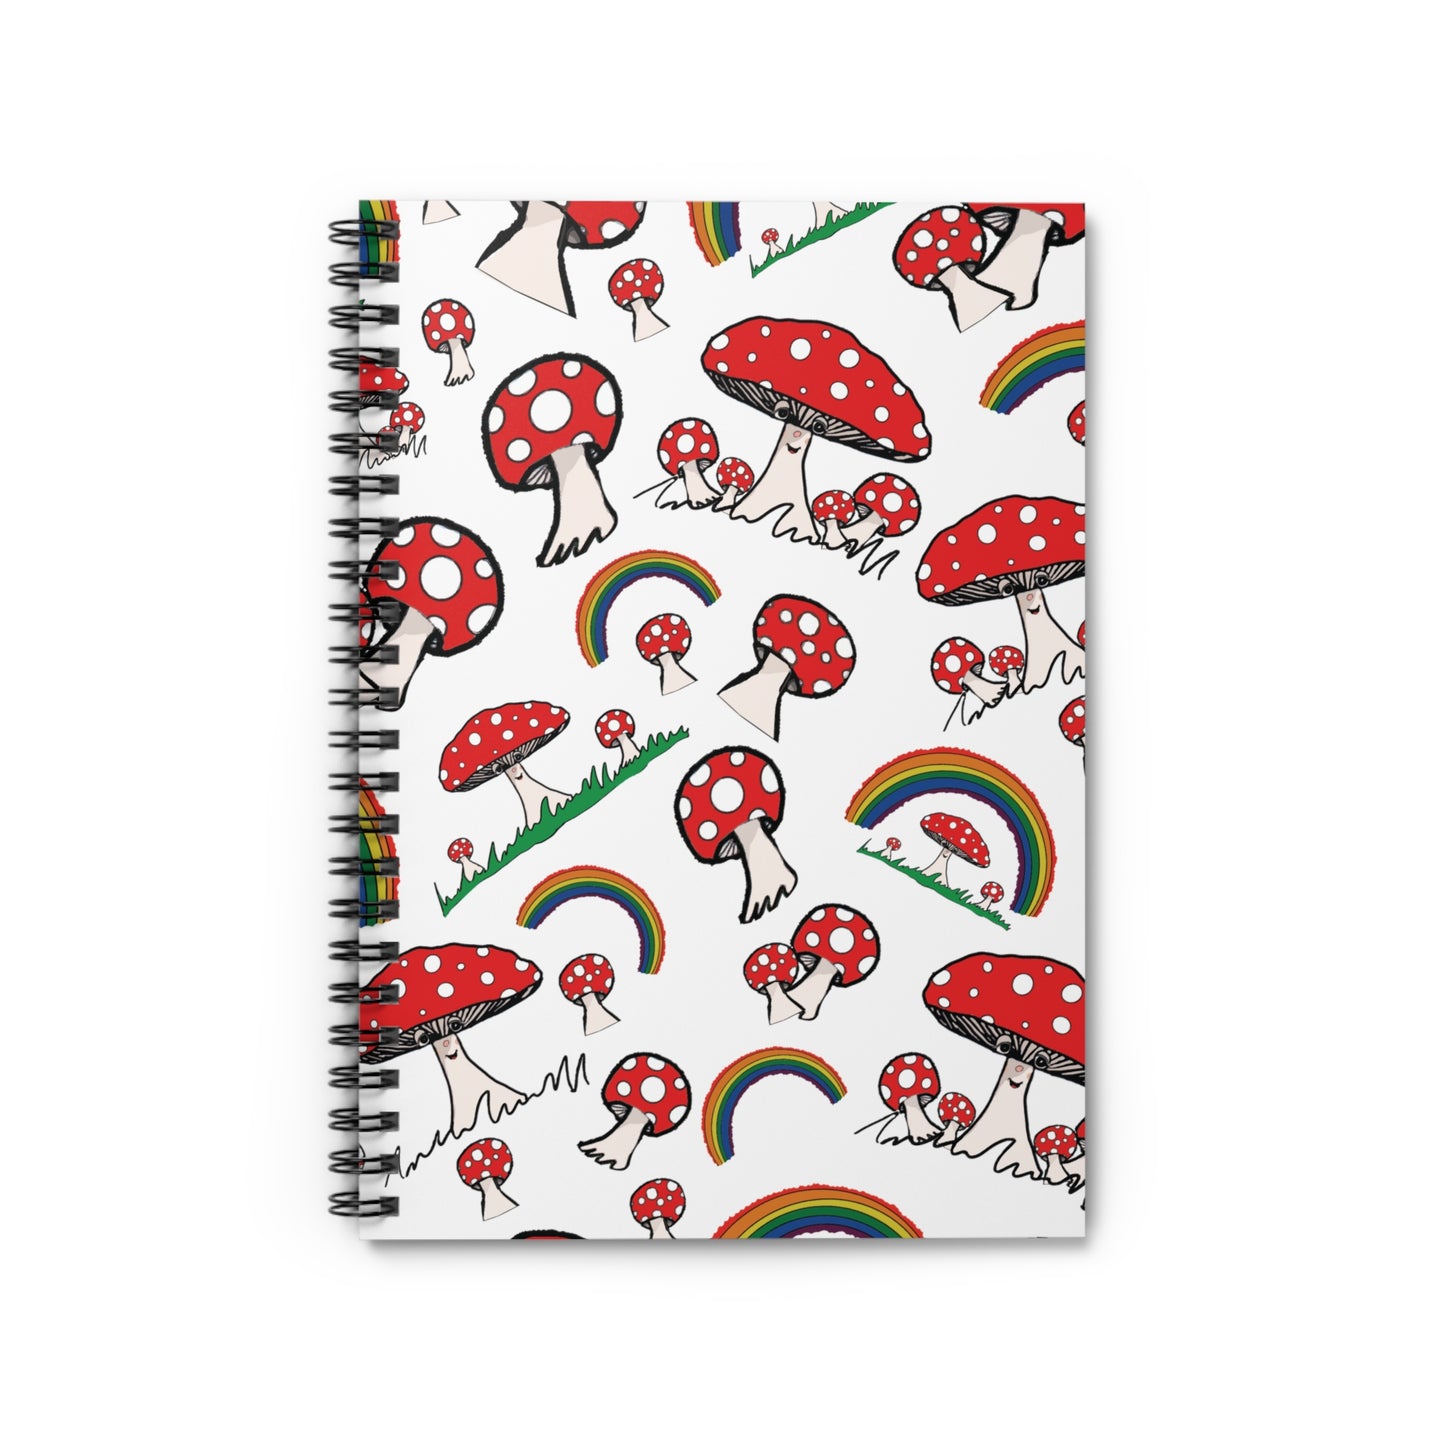 Amanita Mushroom Spiral Notebook - Ruled Line